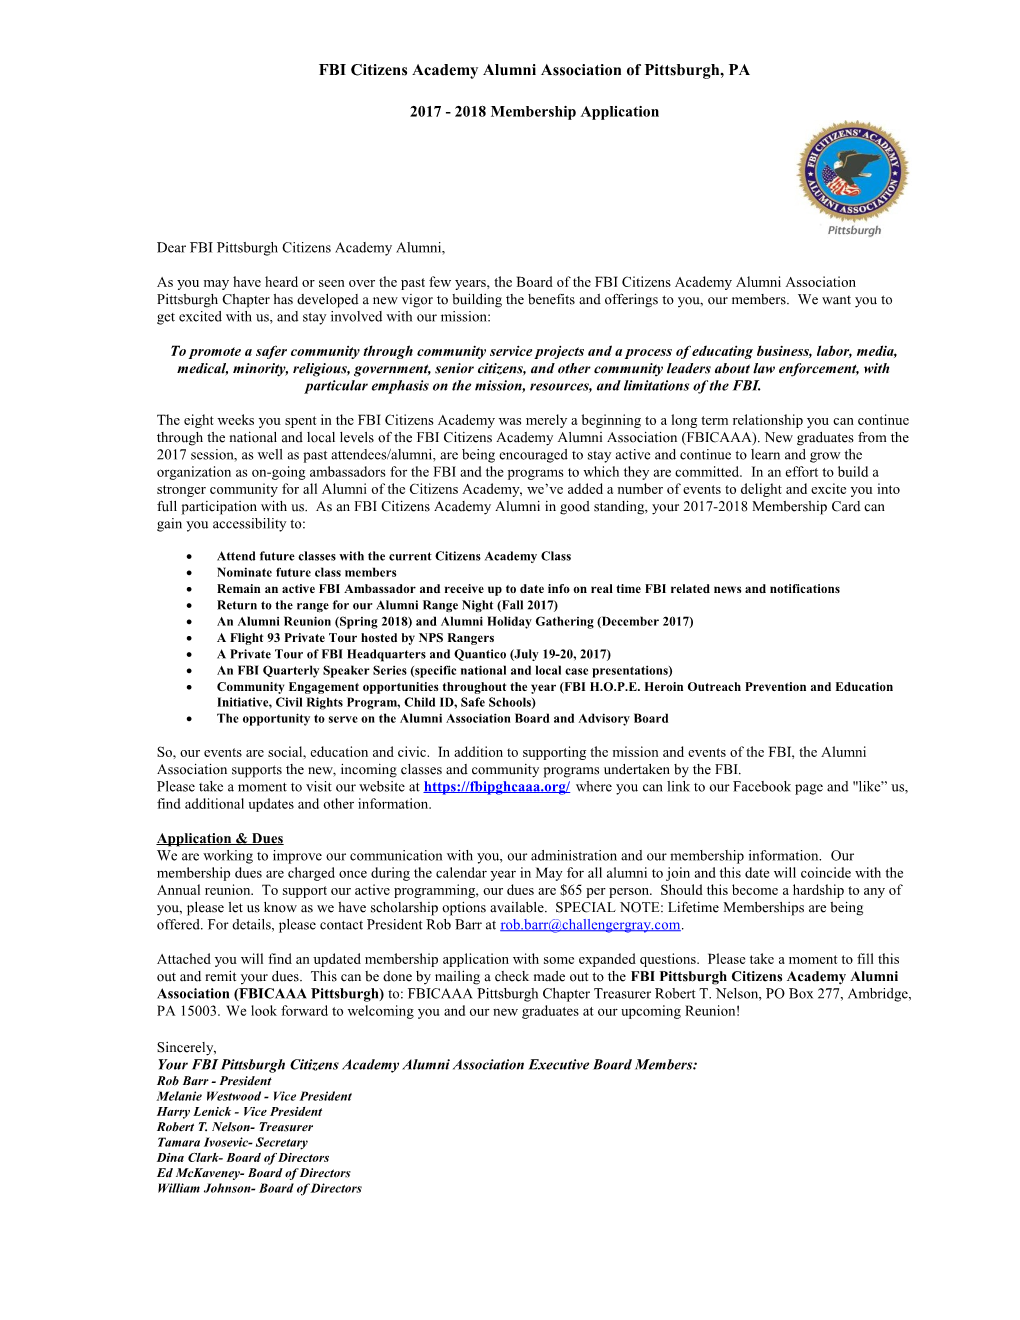 FBI Citizens Academy Alumni Association Washington DC Division